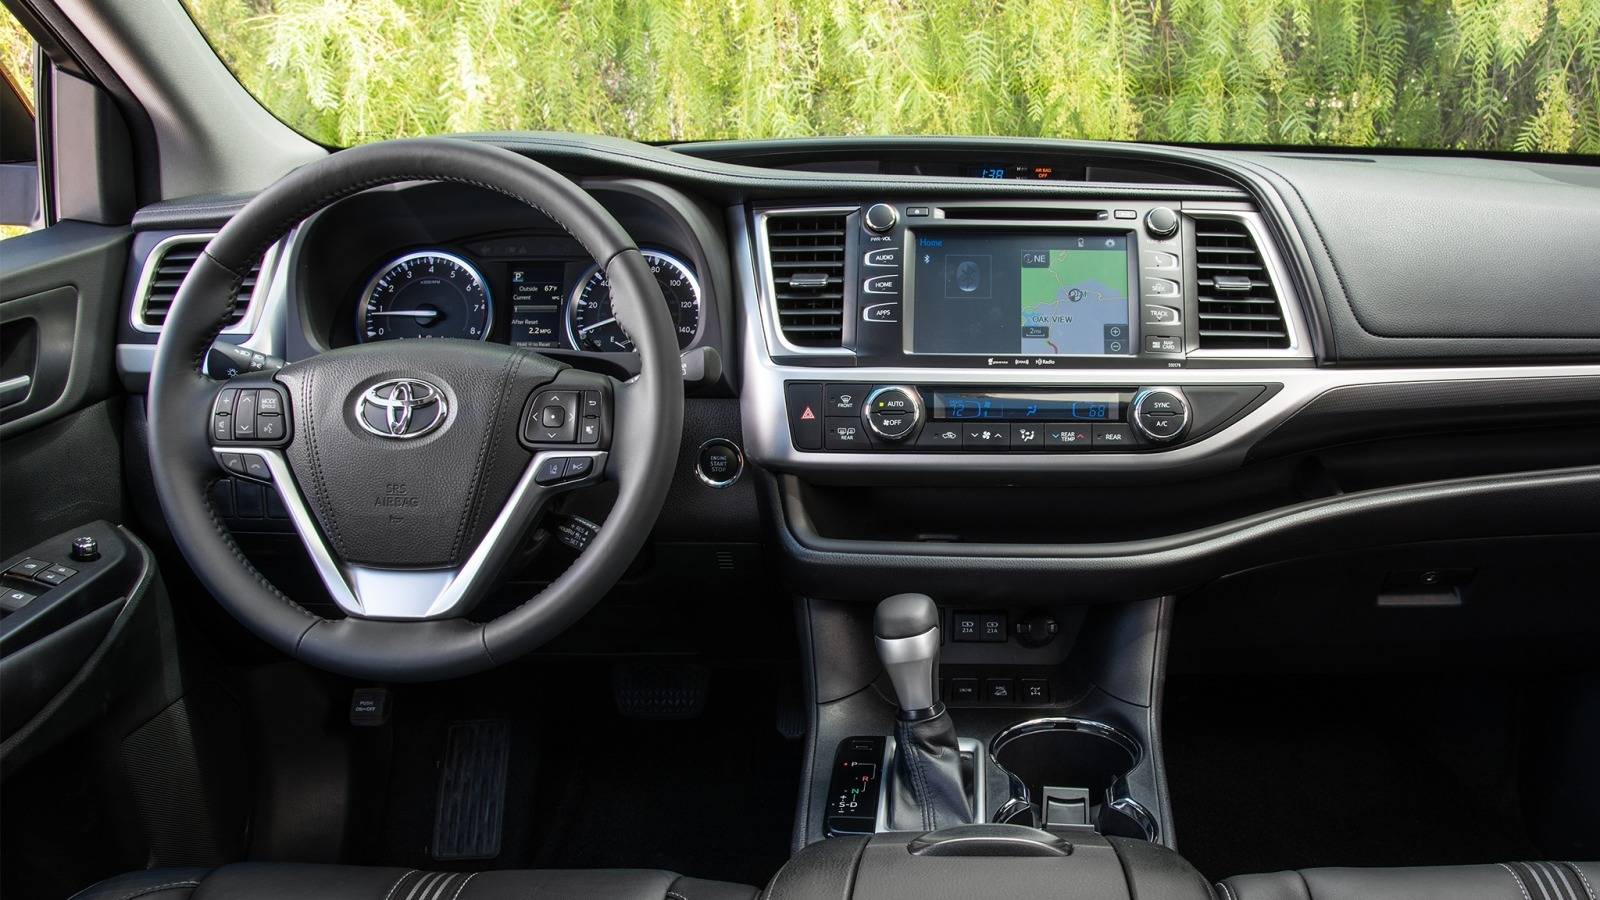 Toyota Highlander 2020 Interior Reviews Pictures